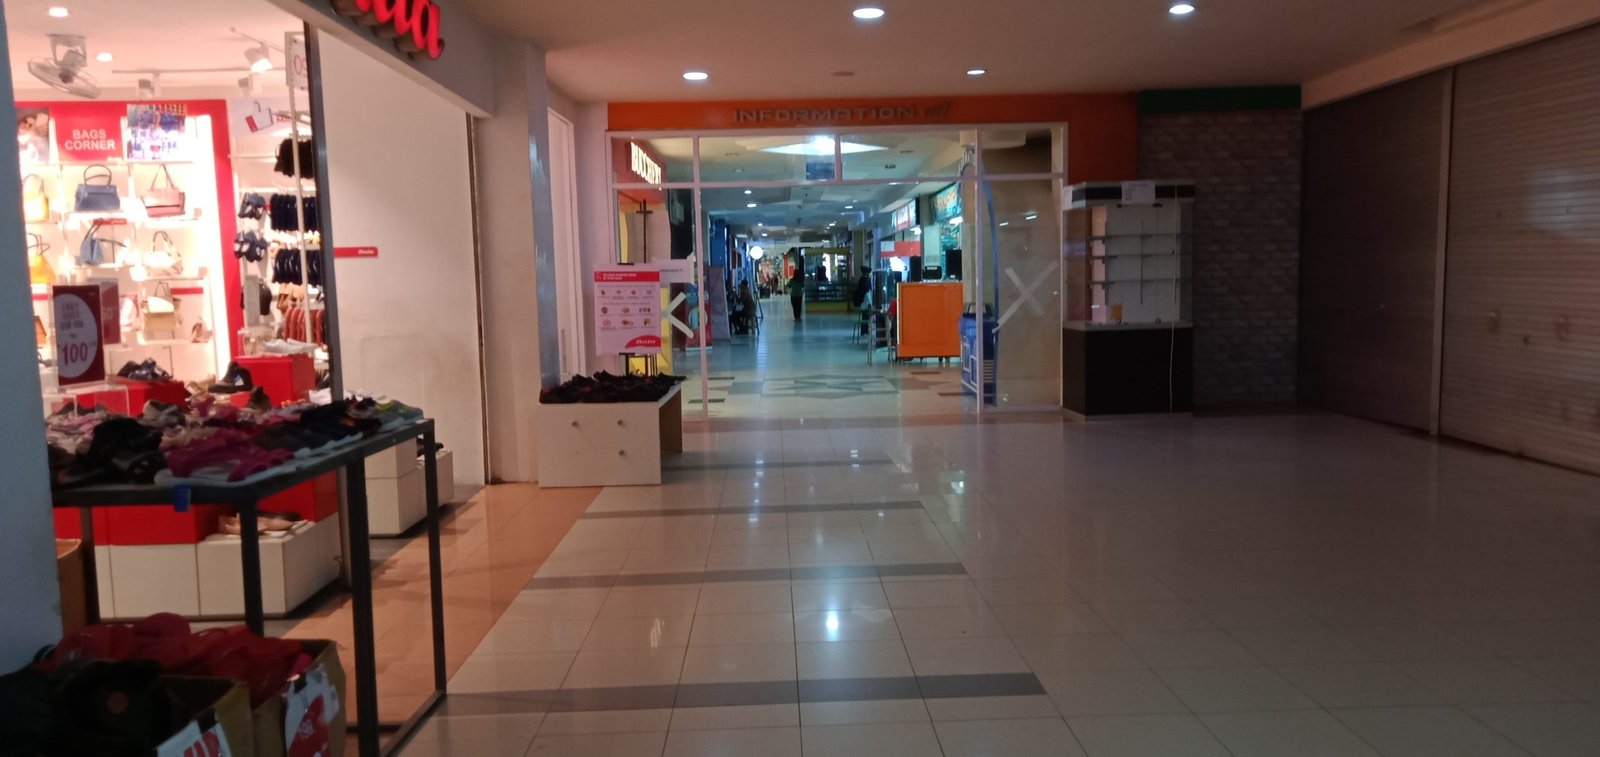 Pengunjung Mall Mataram Masih Sepi